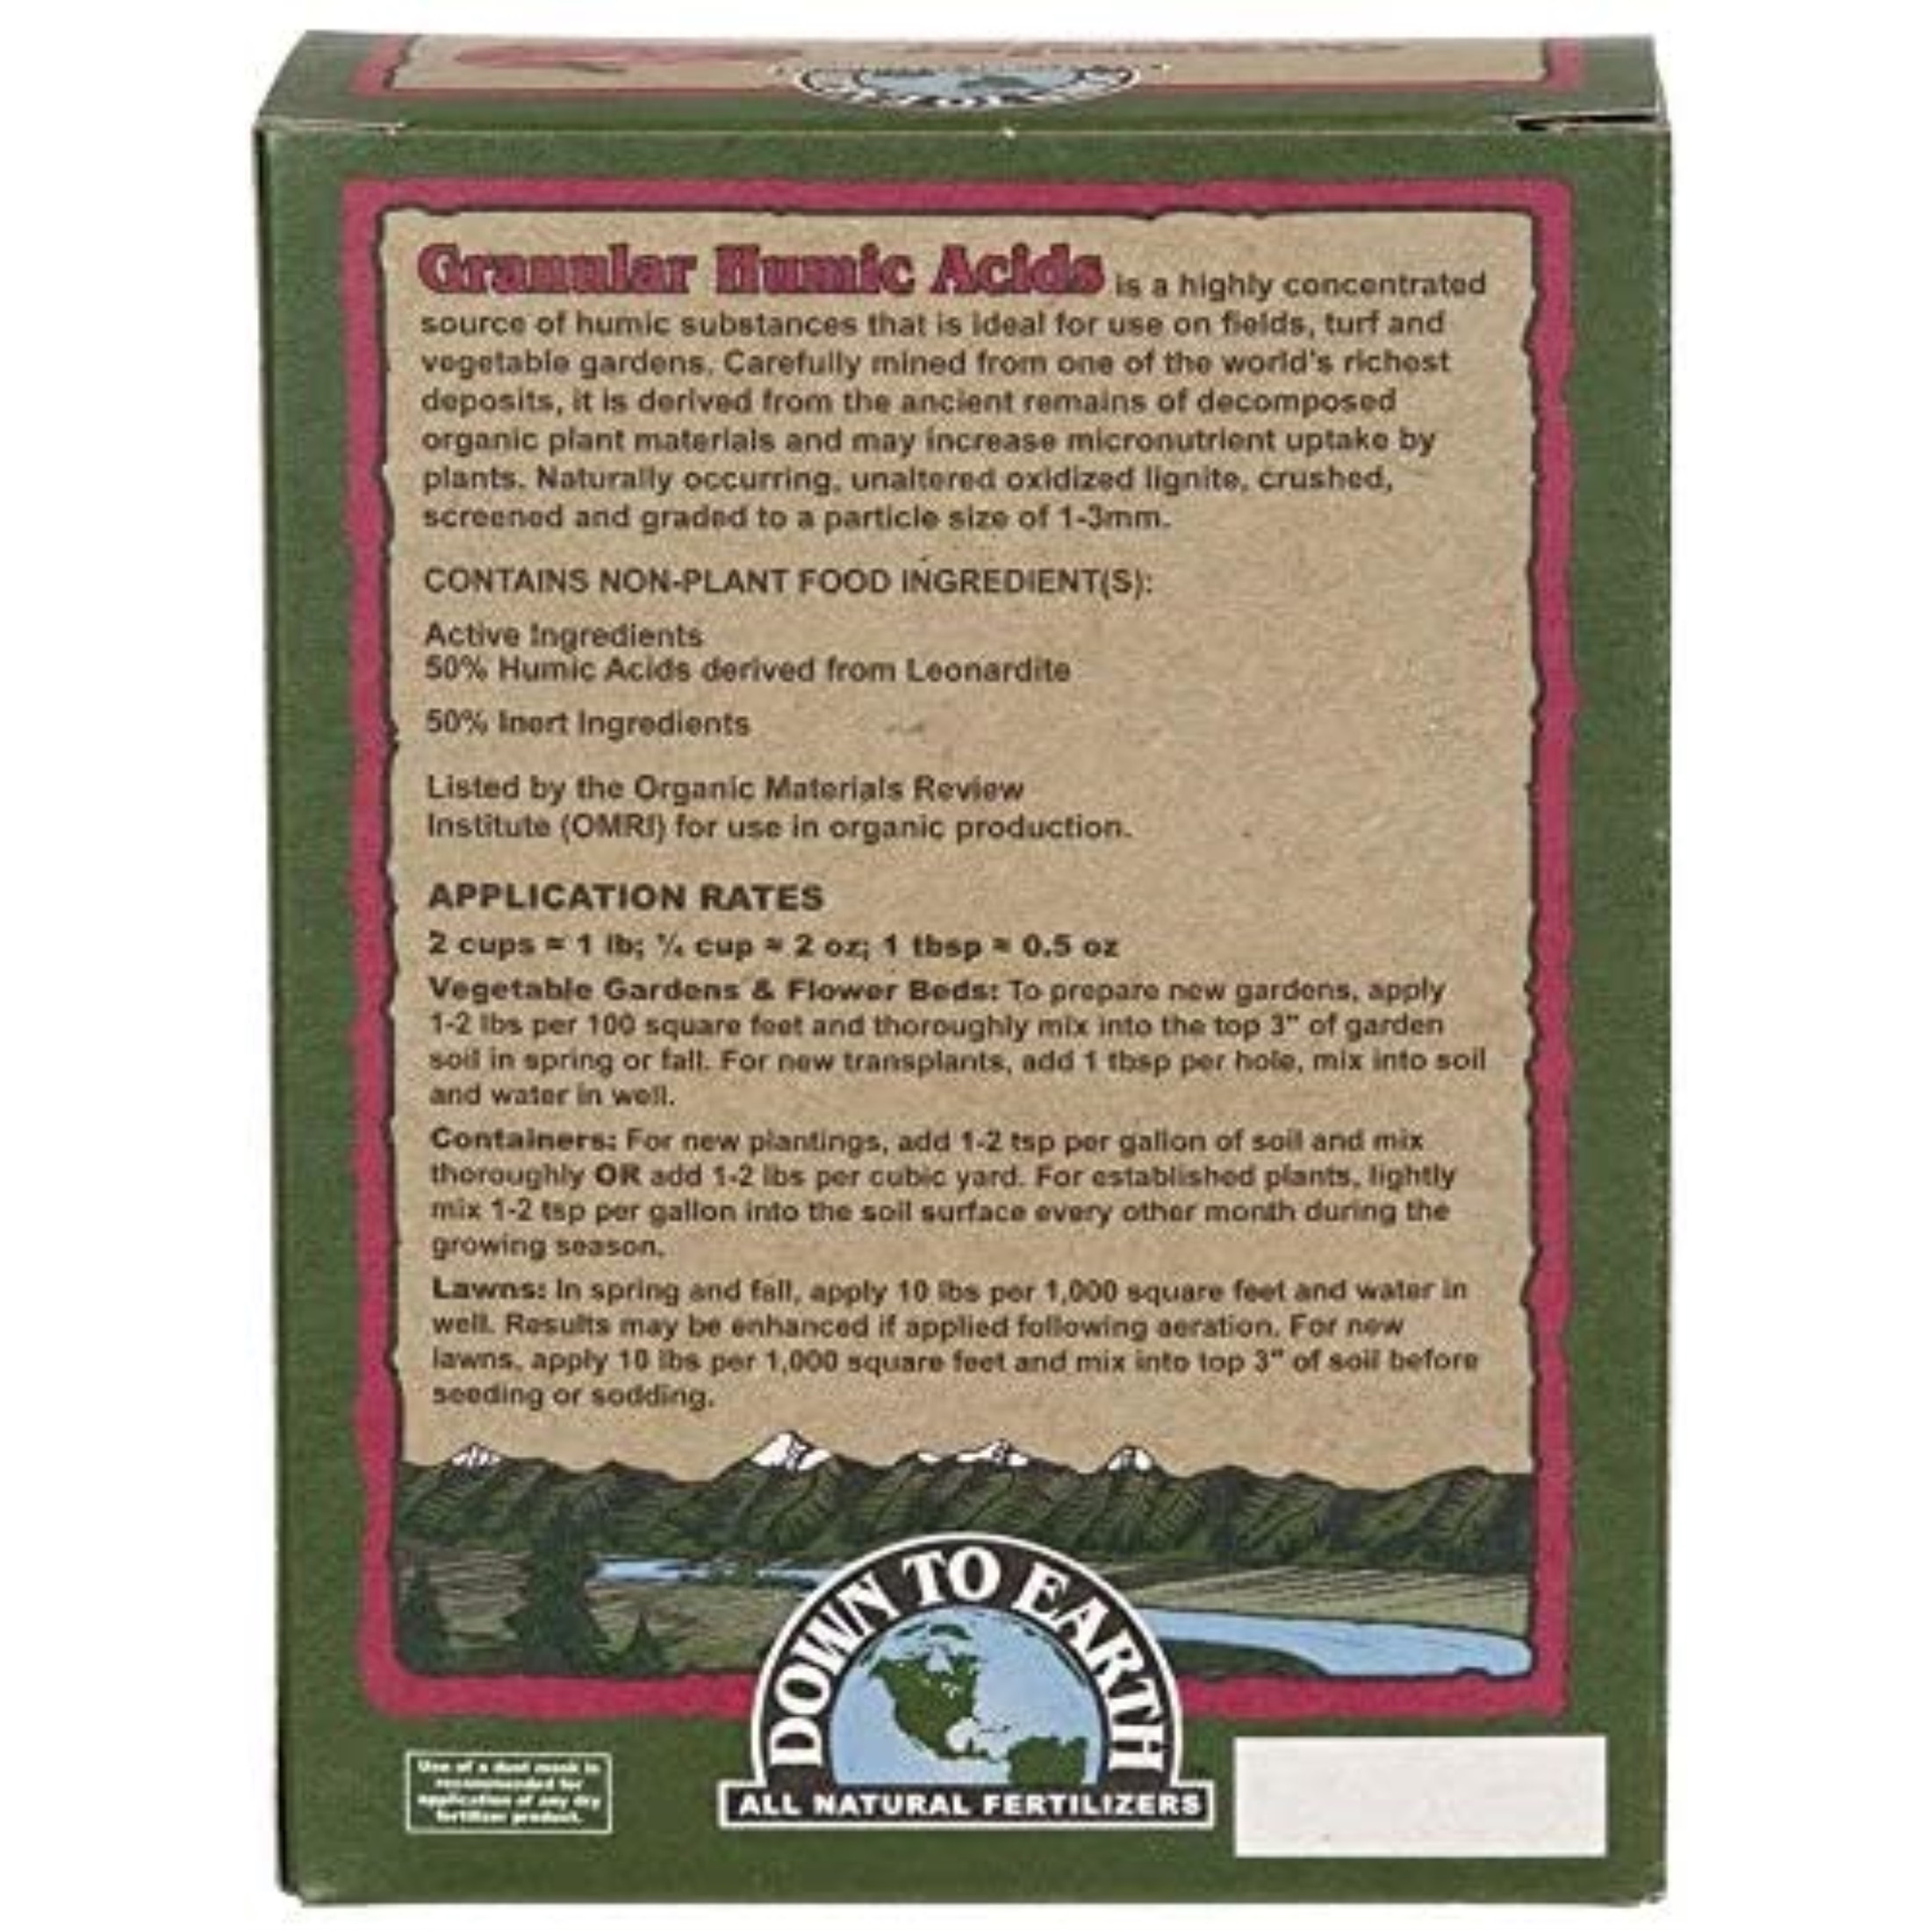 Down to Earth Organic Granular Humic Acids Fertilizer Mix, 1 lb